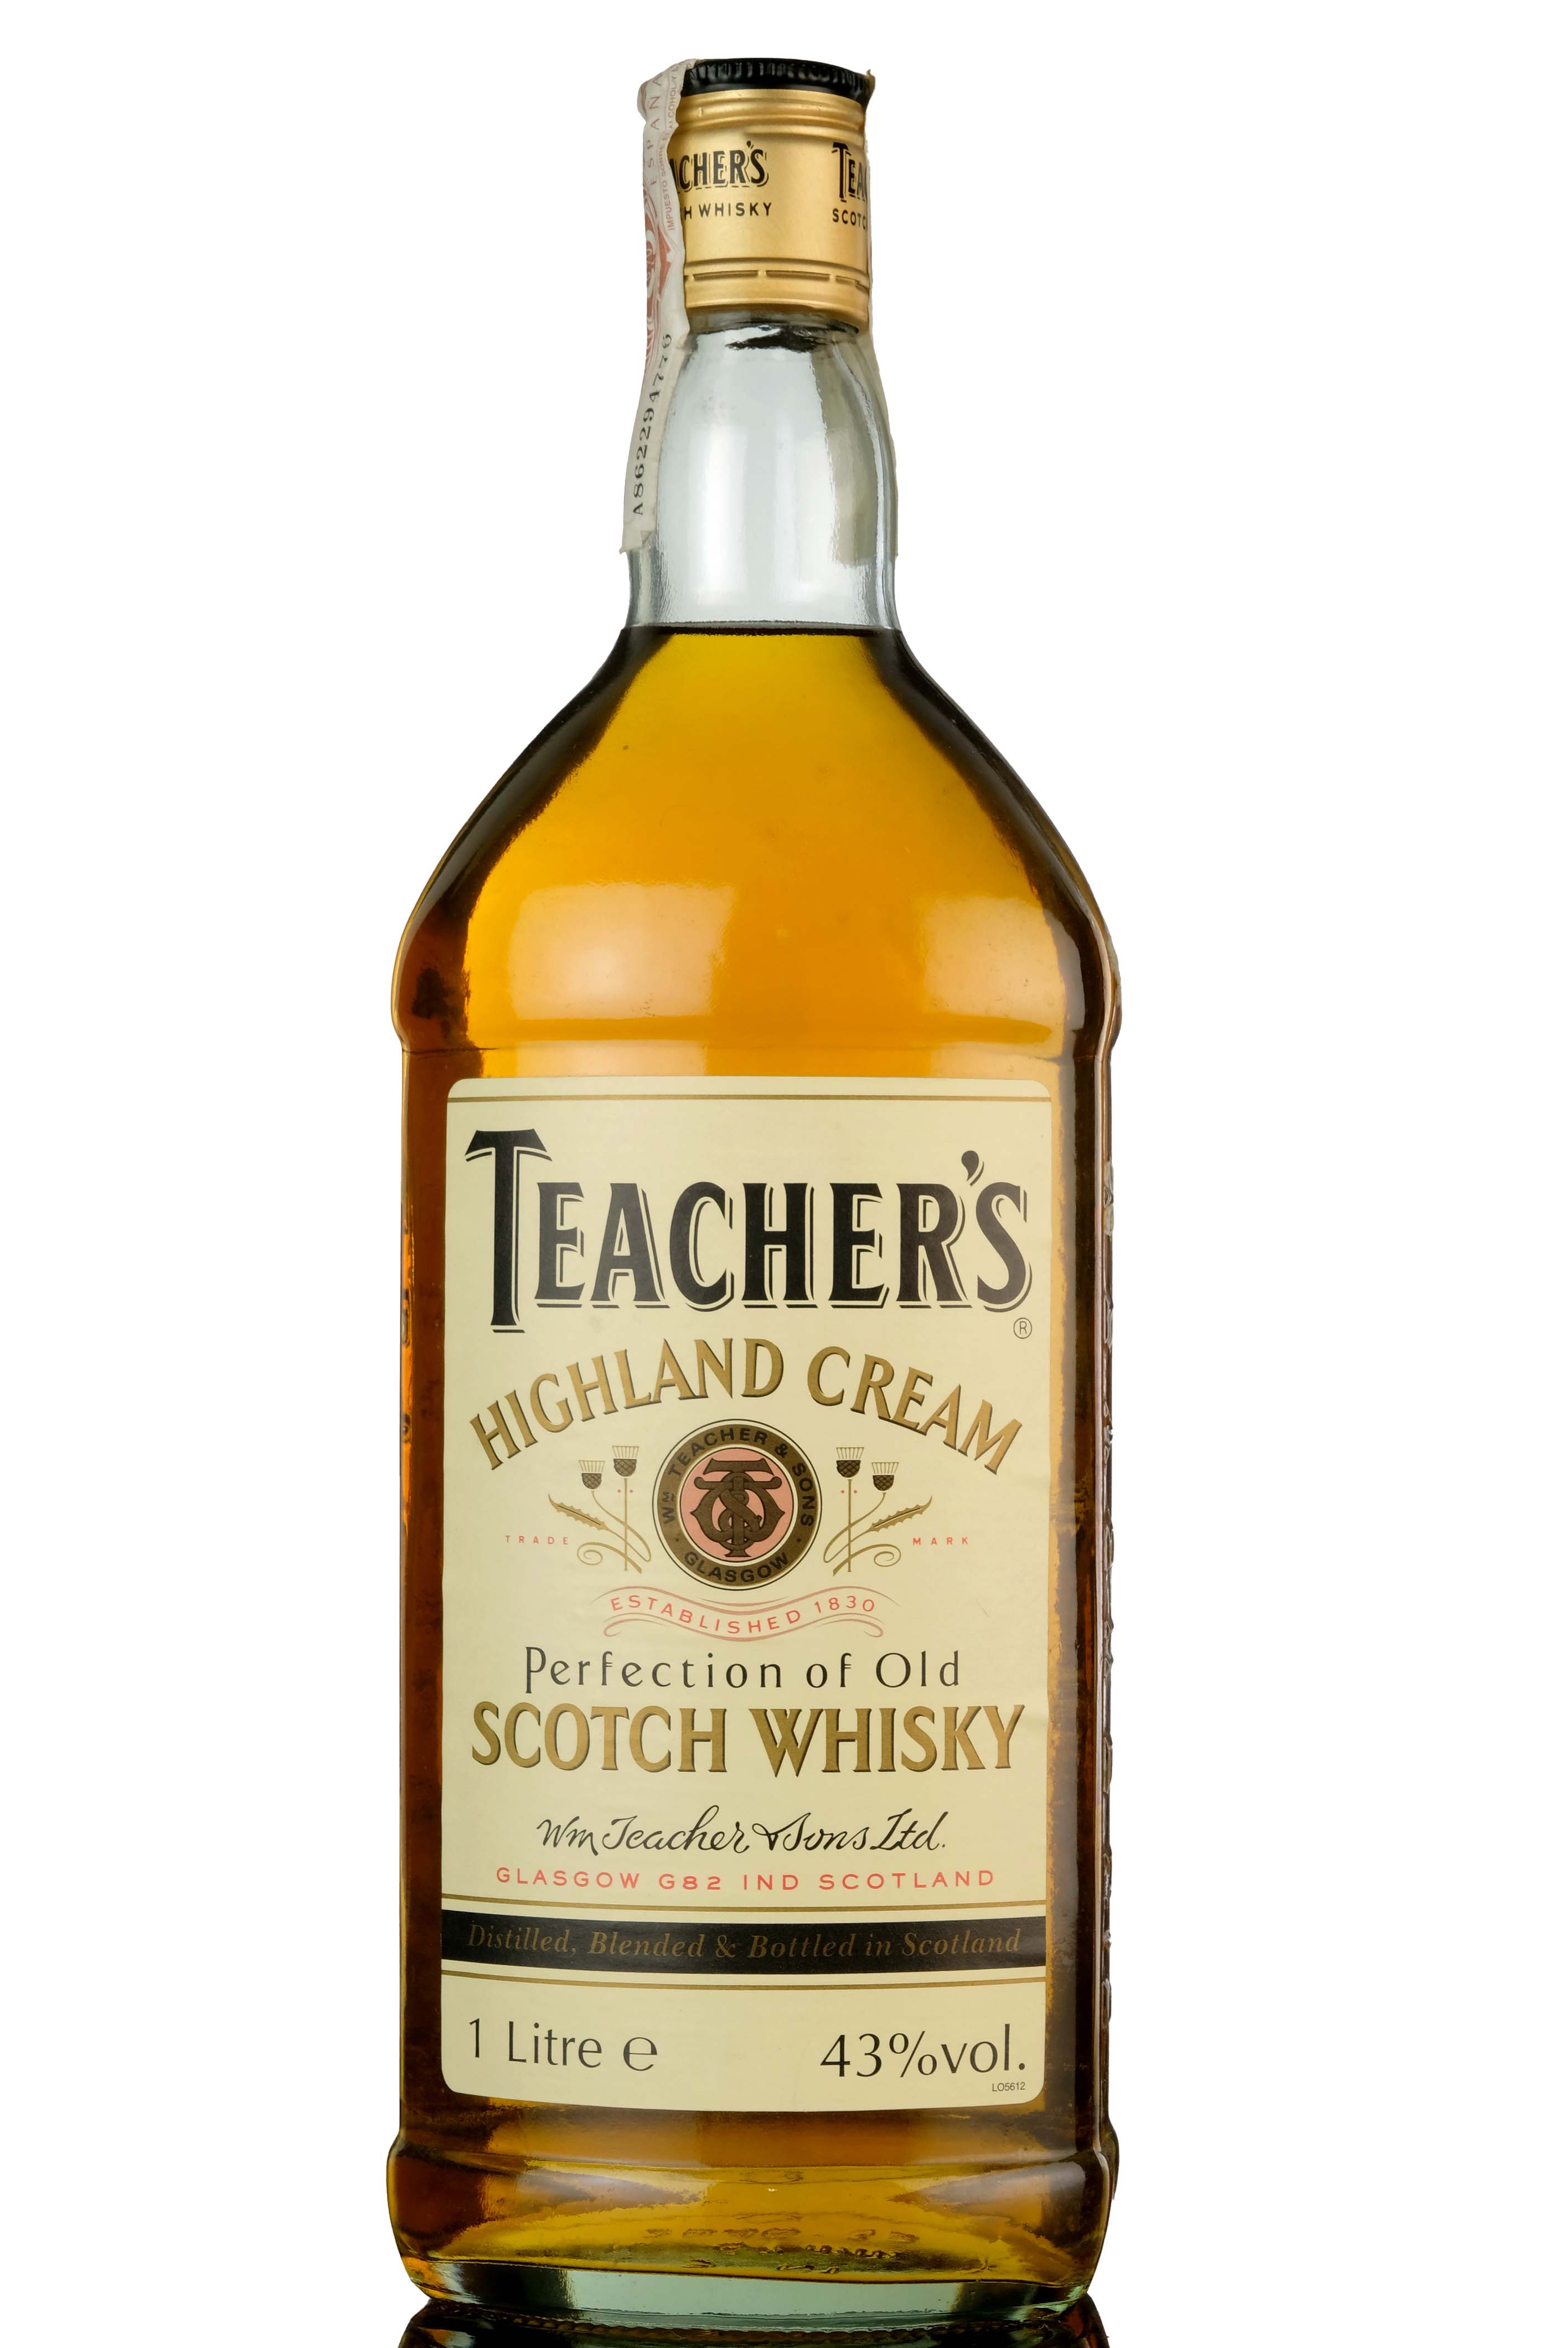 Teachers Highland Cream - 1 Litre